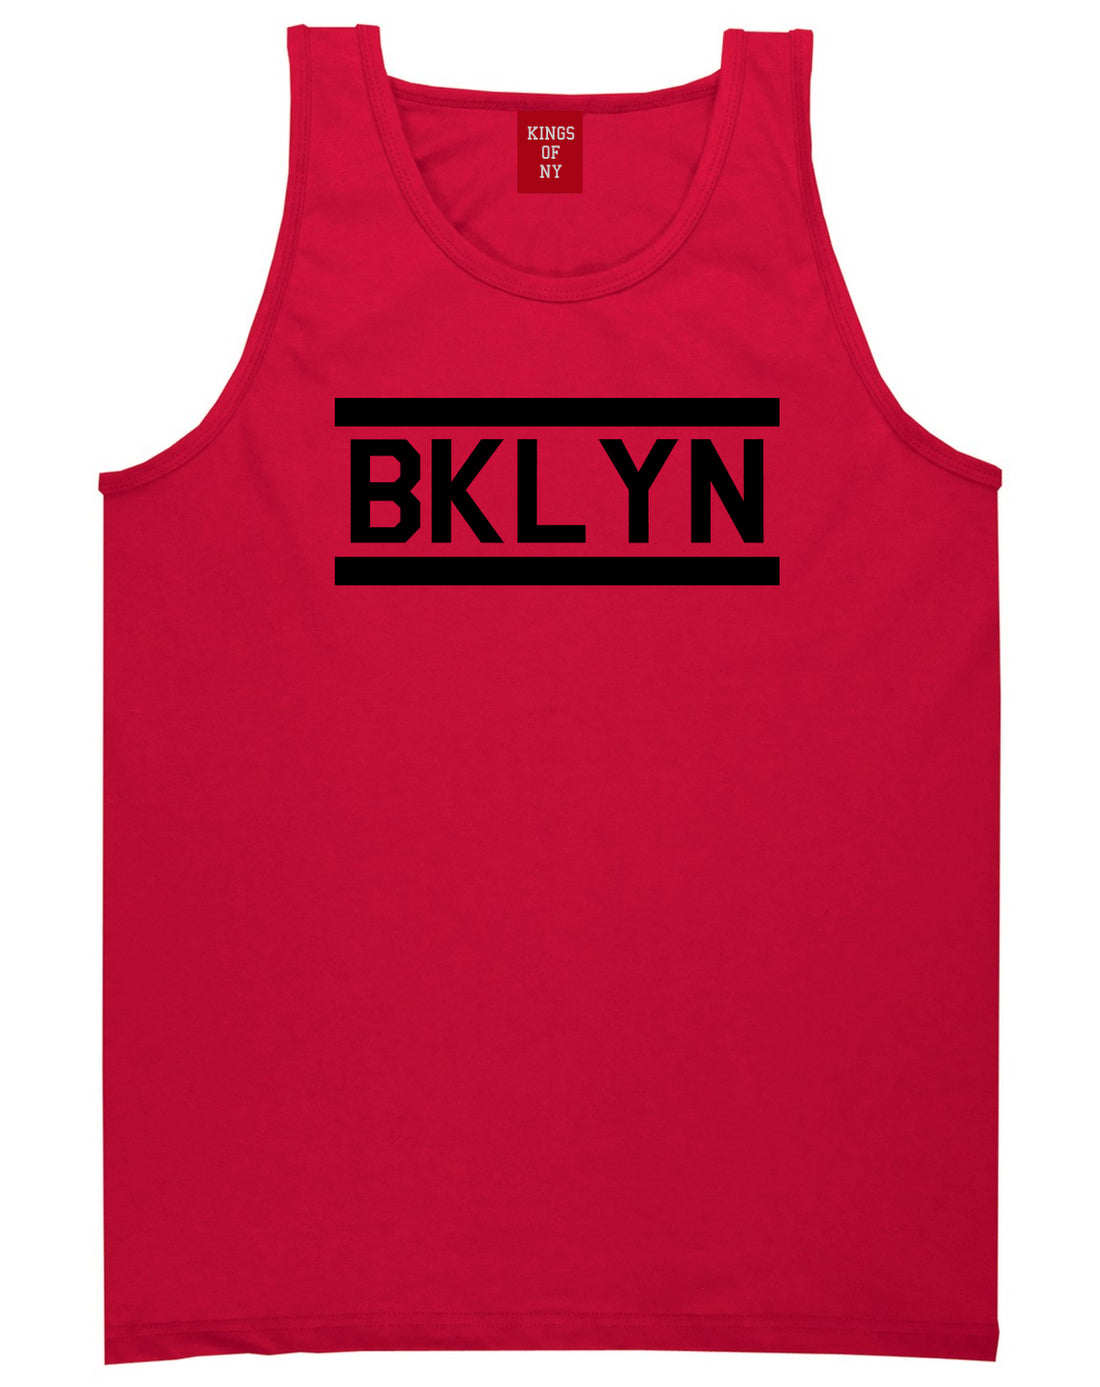 BKLYN Brooklyn Mens Tank Top Shirt Red by Kings Of NY